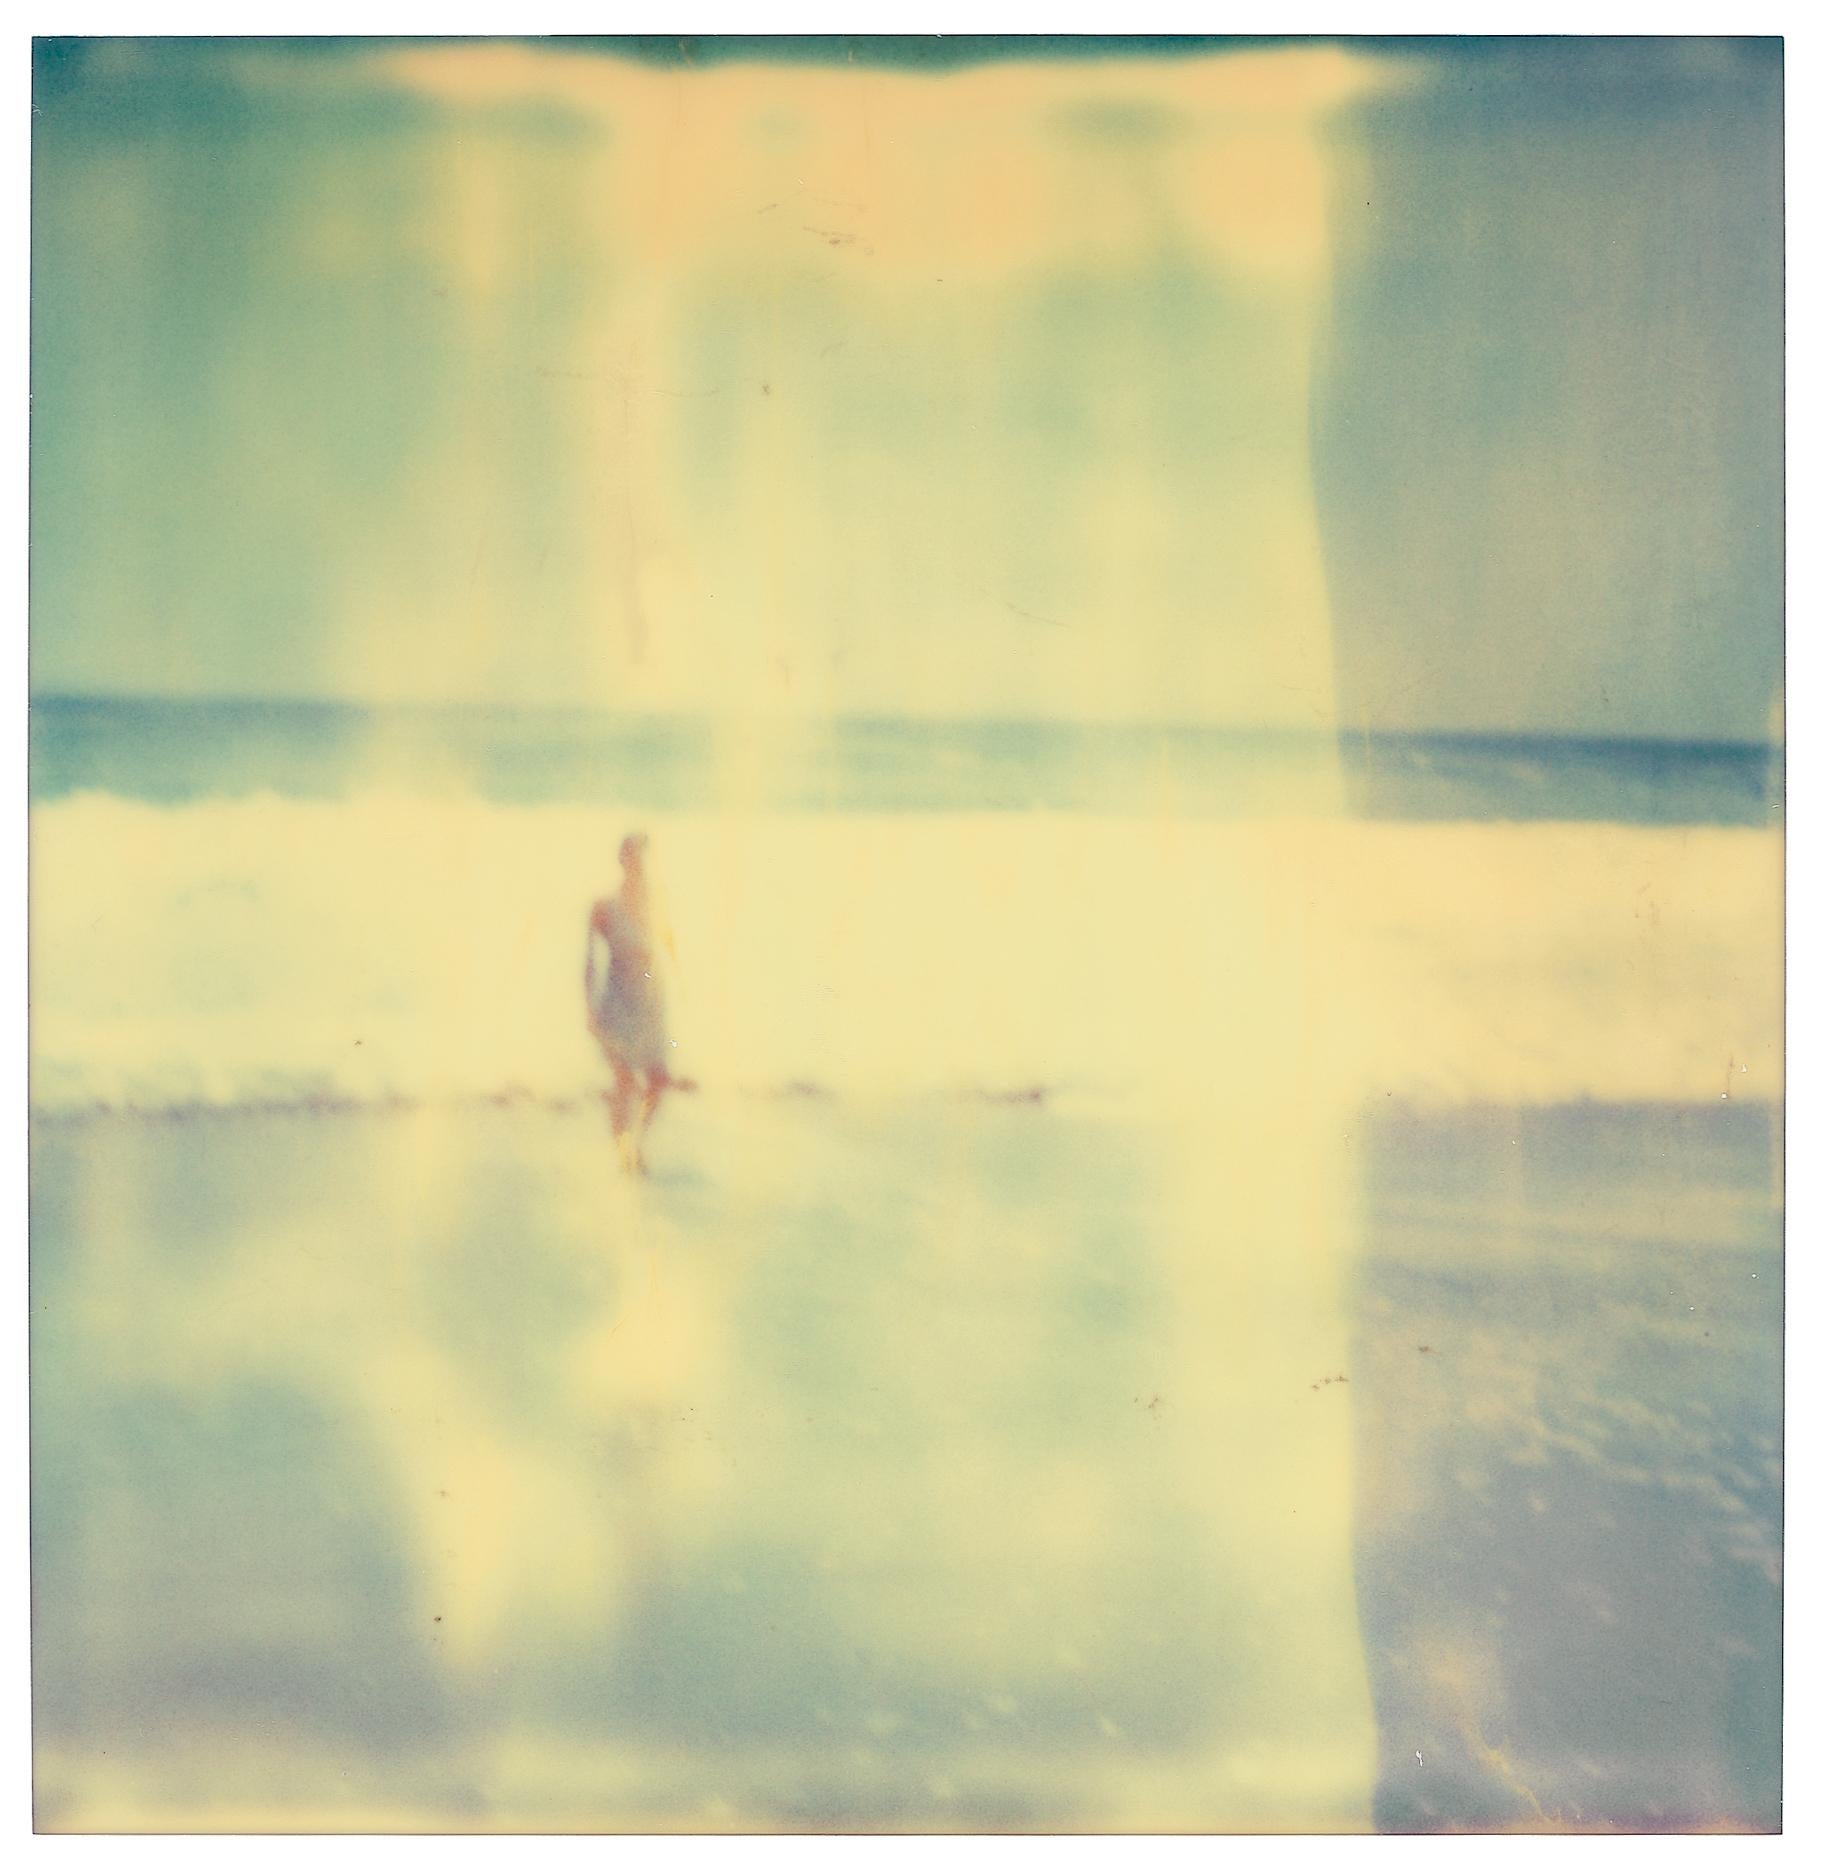 Woman in Malibu - Polaroid, analog, 21st Century, Woman - Contemporary Photograph by Stefanie Schneider